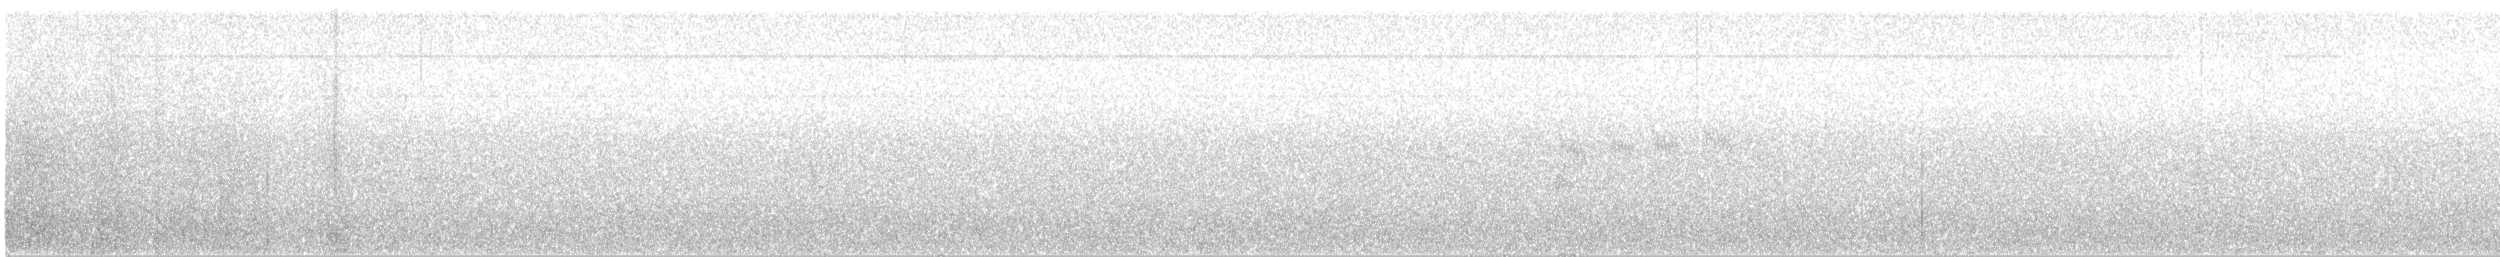 Патагонский пересмешник - ML52559181